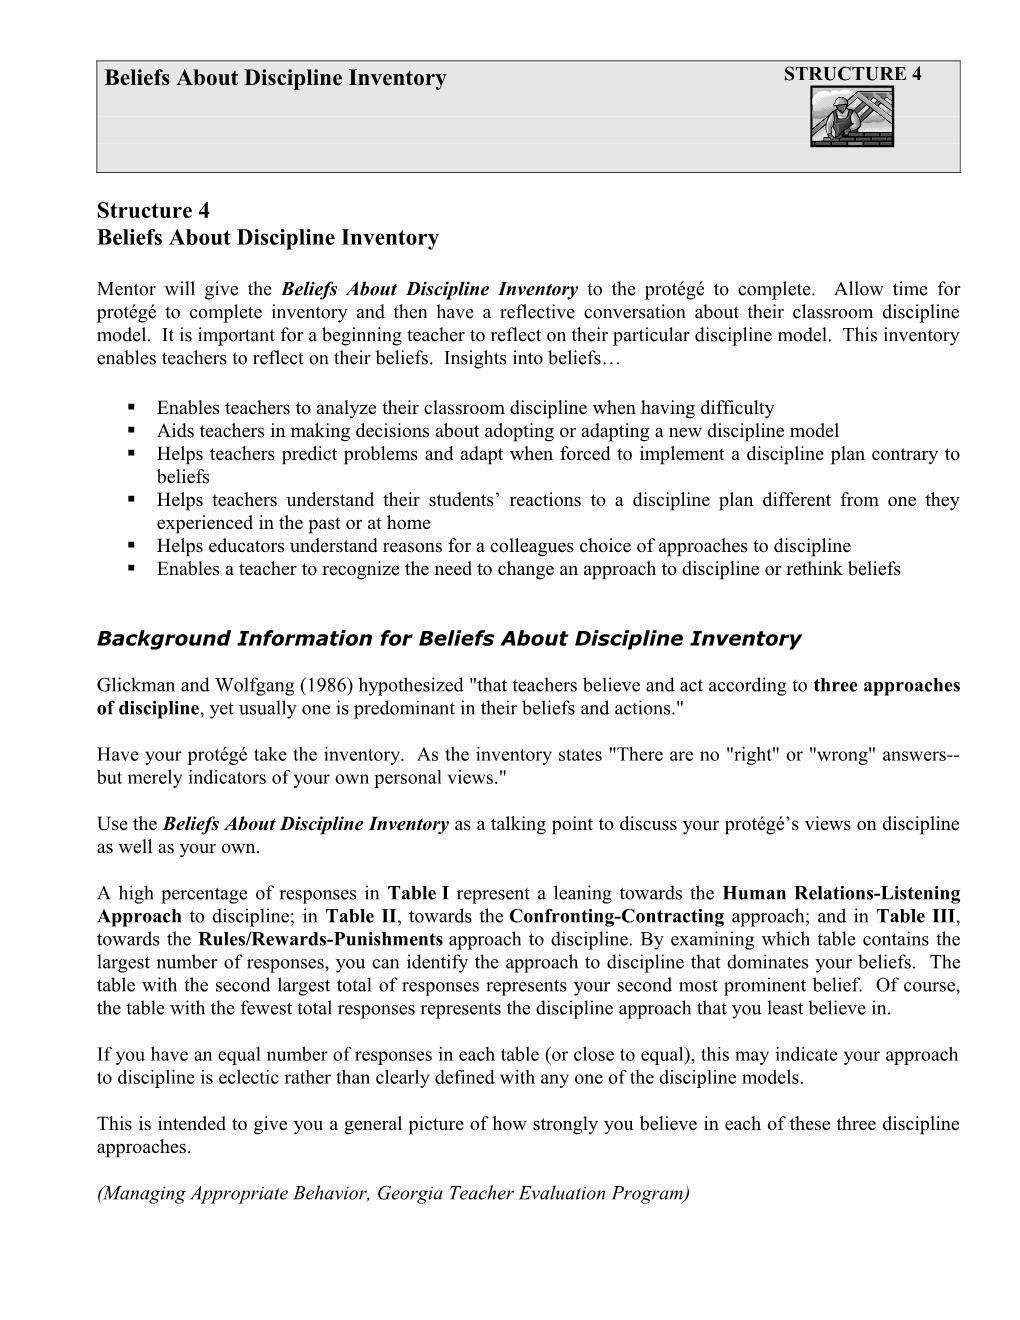 Background Information for Beliefs on Discipline Inventory